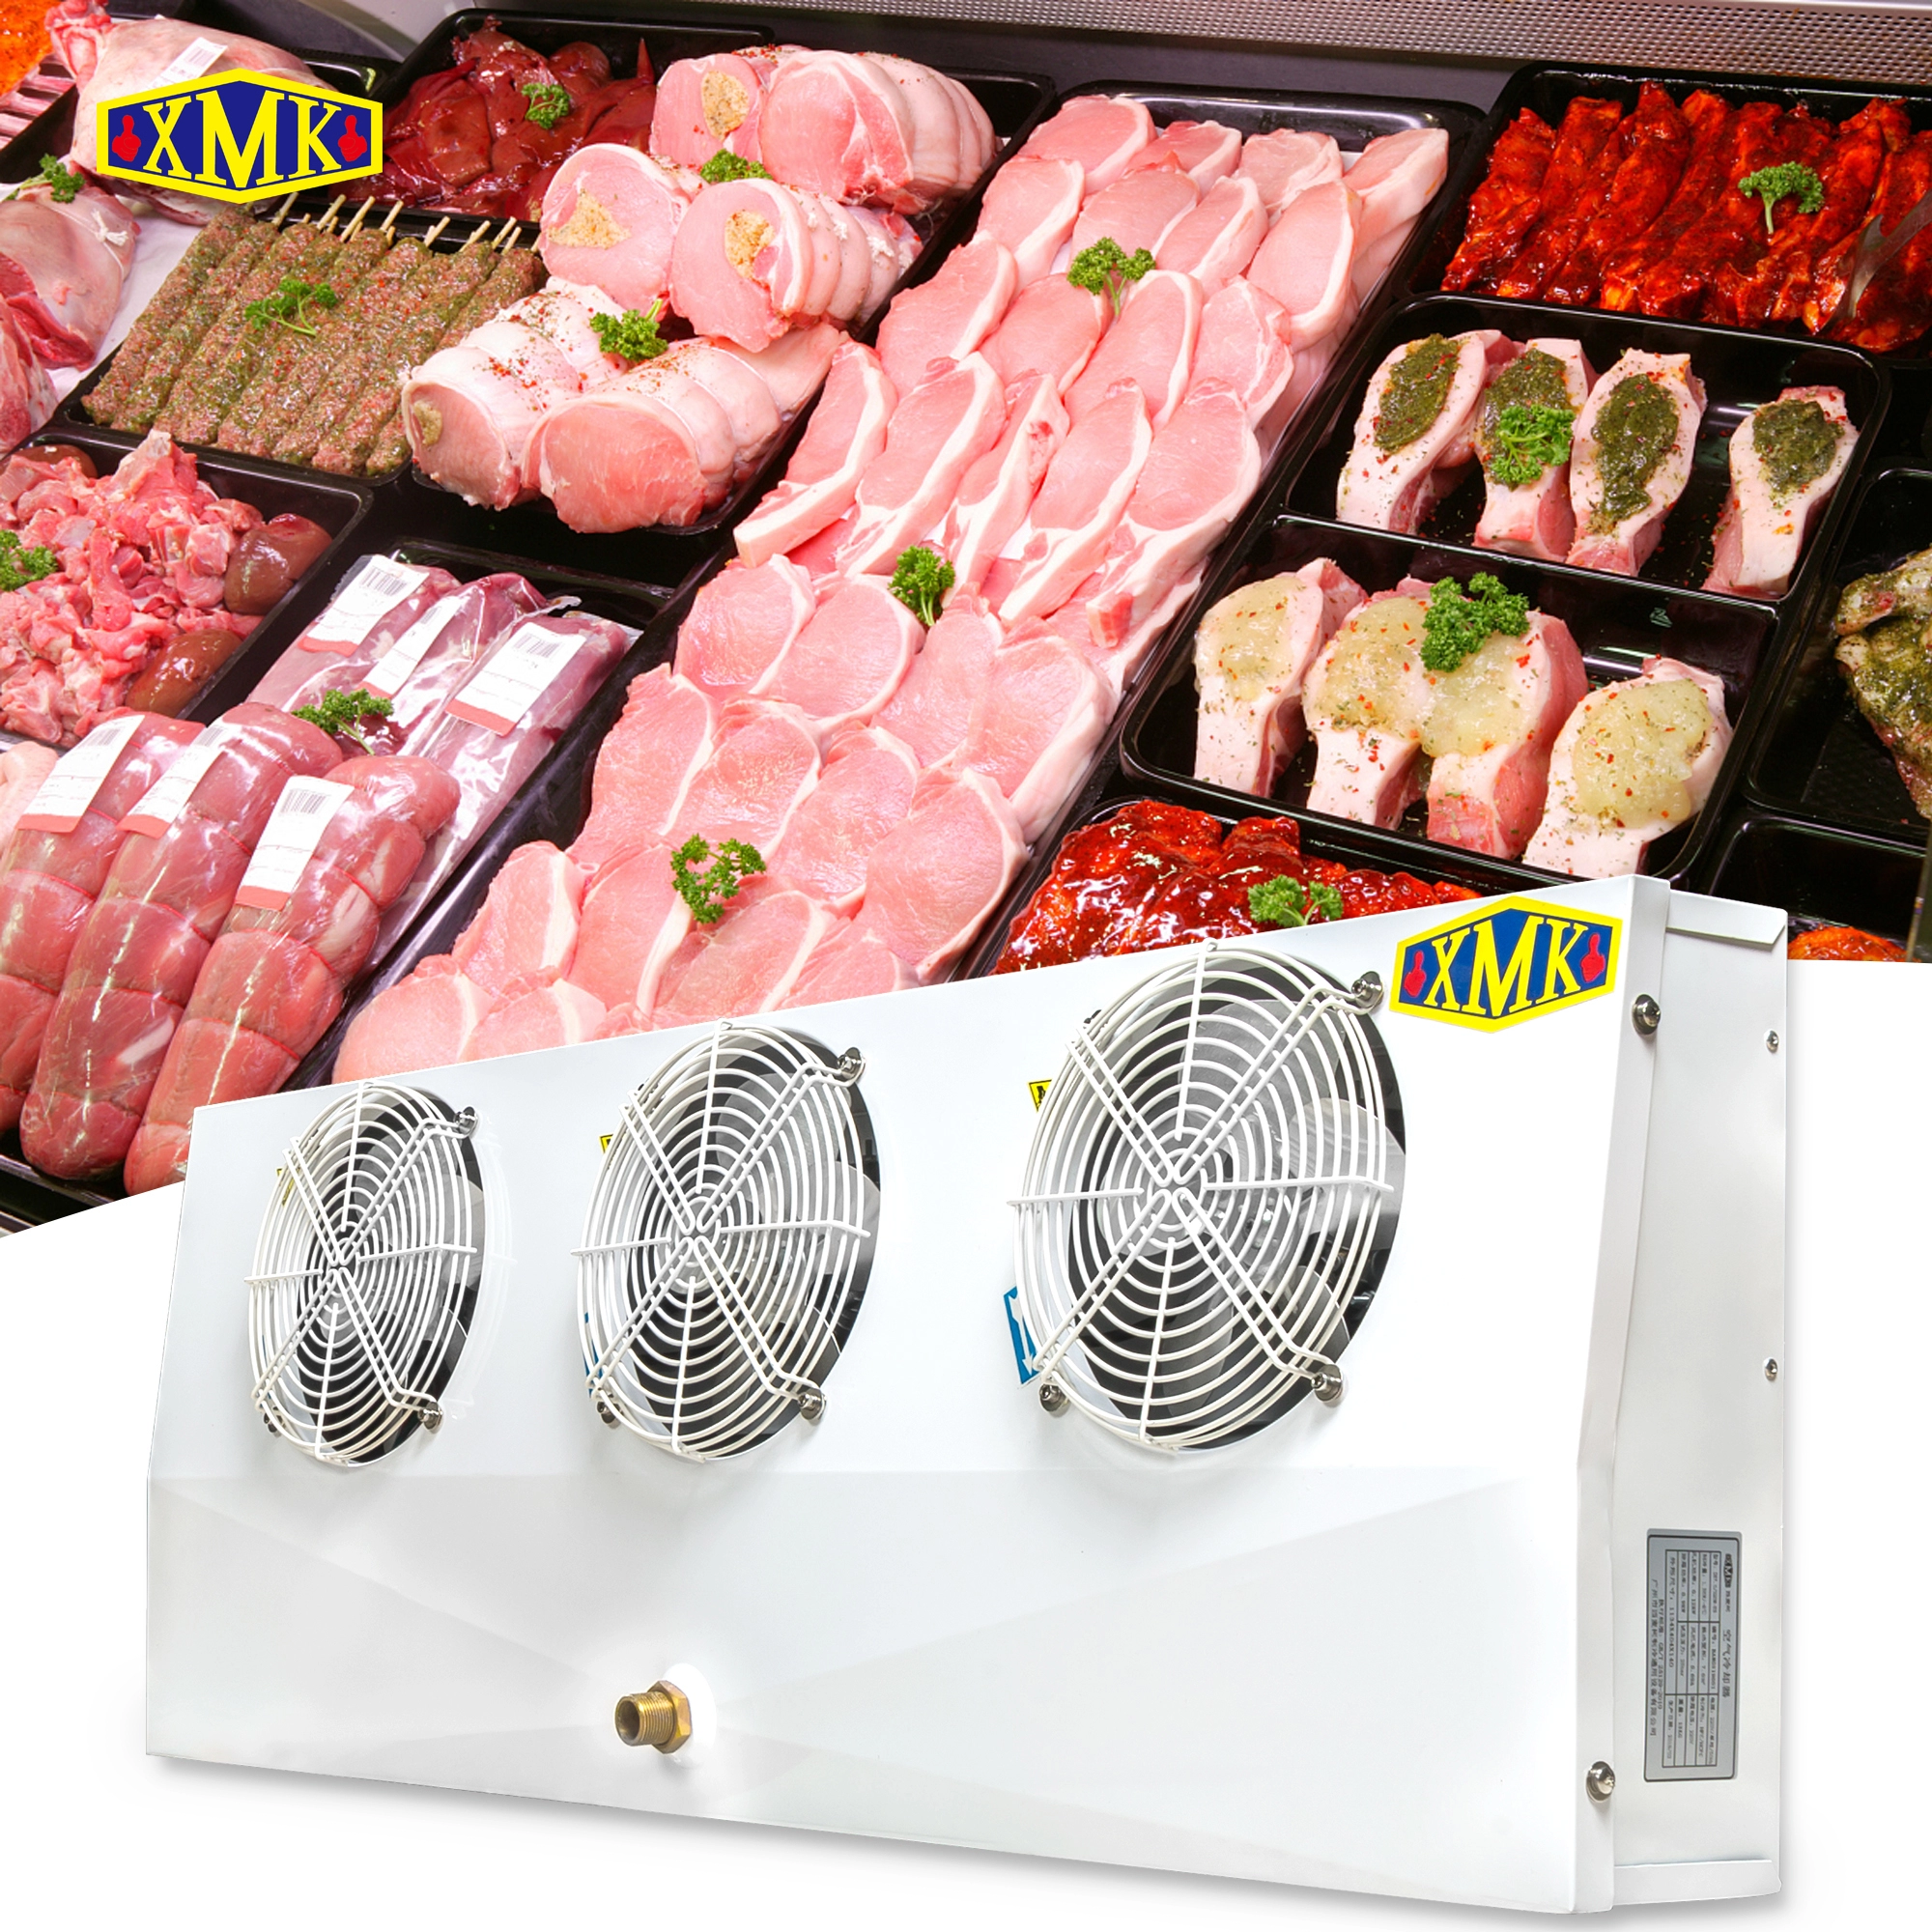 Display case commerical refrigerator DE air cooler